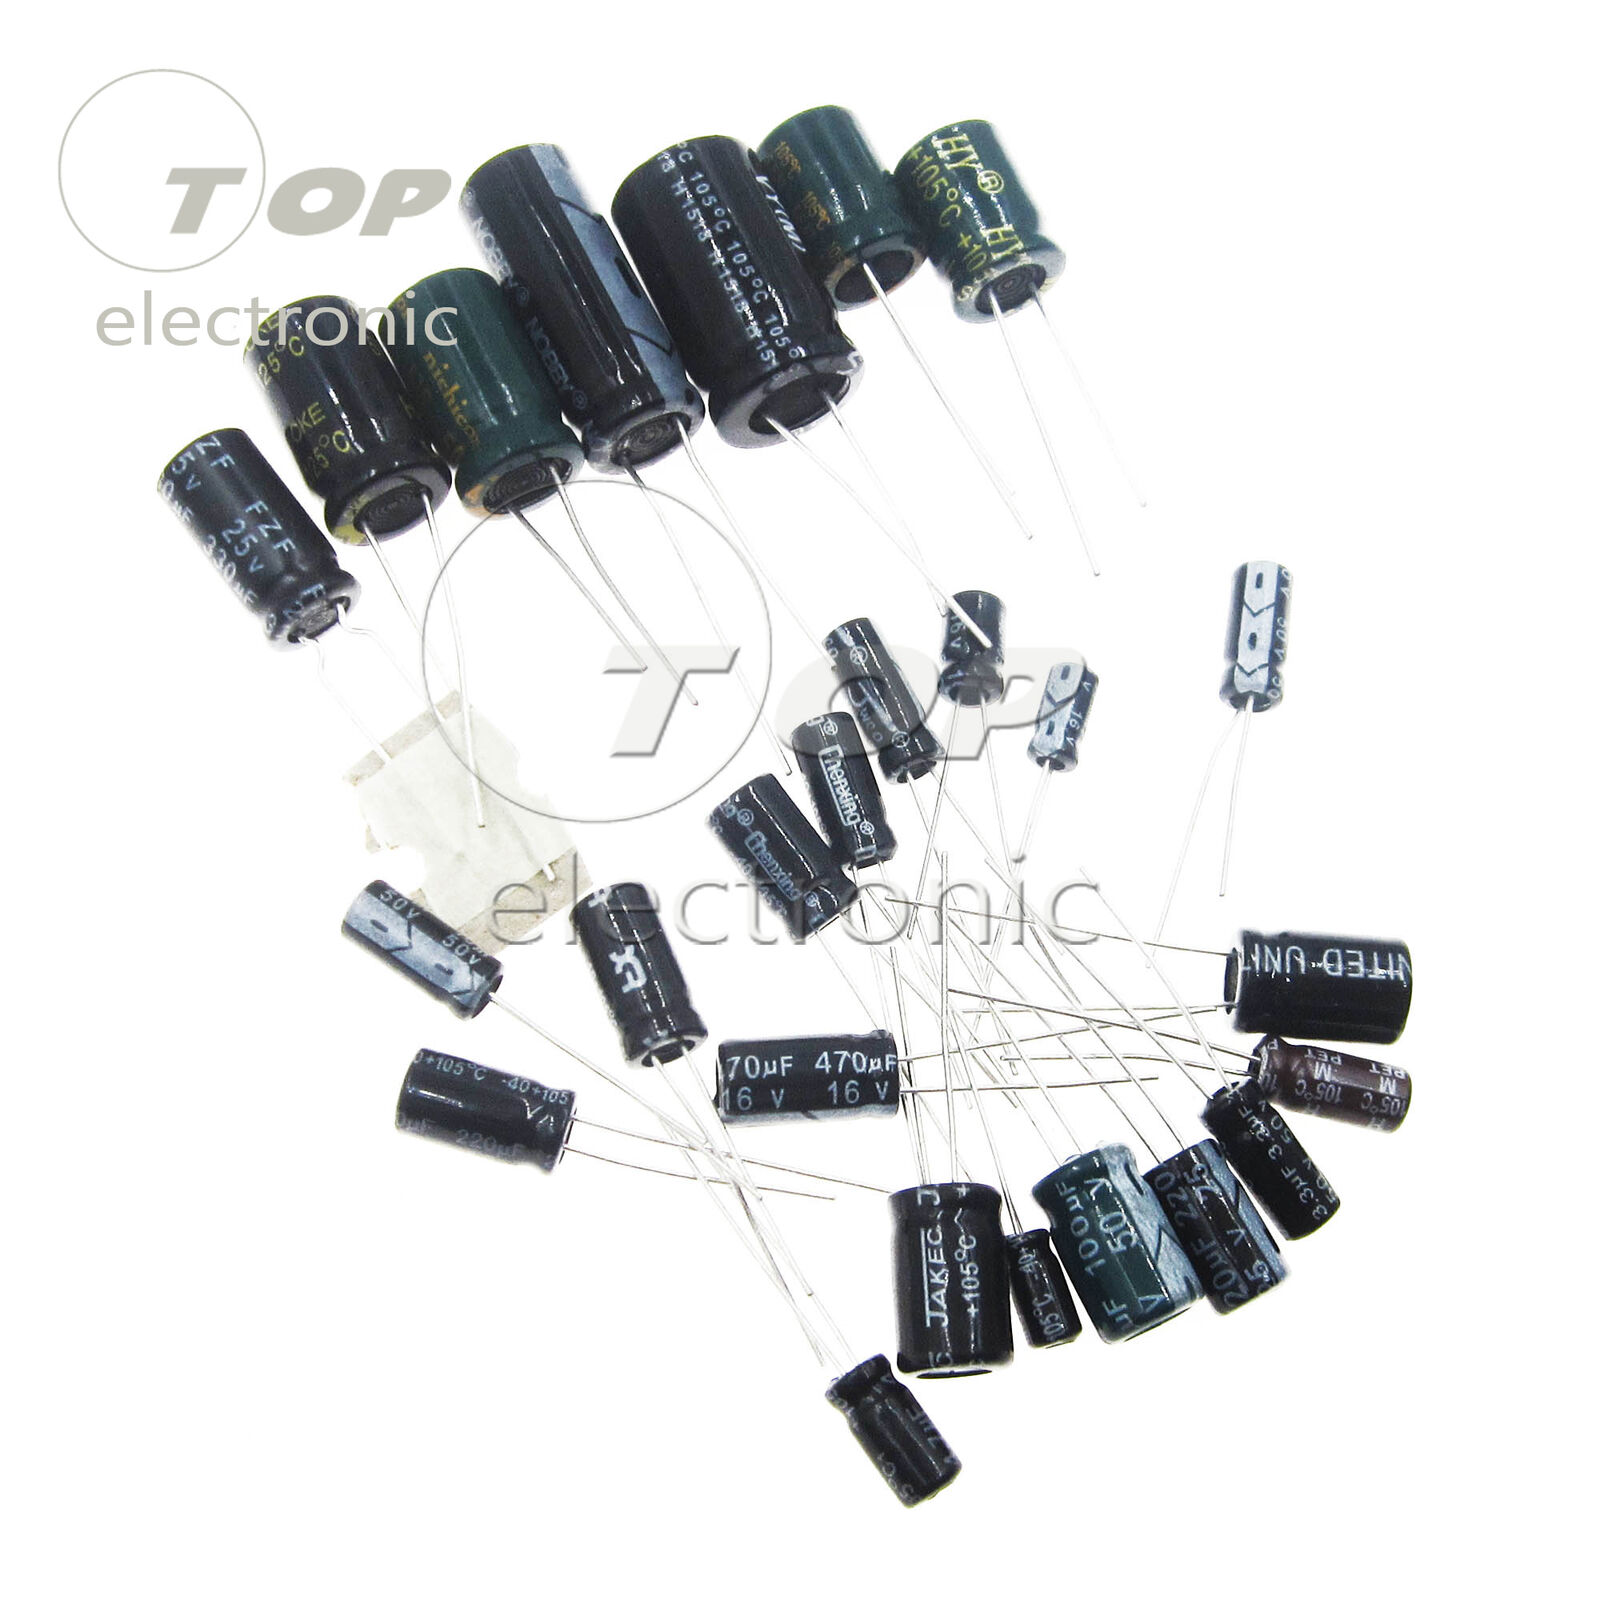 (1uF~2200uF) 25 value 125pcs Electrolytic Capacitors Assortment Kit Assorted Set